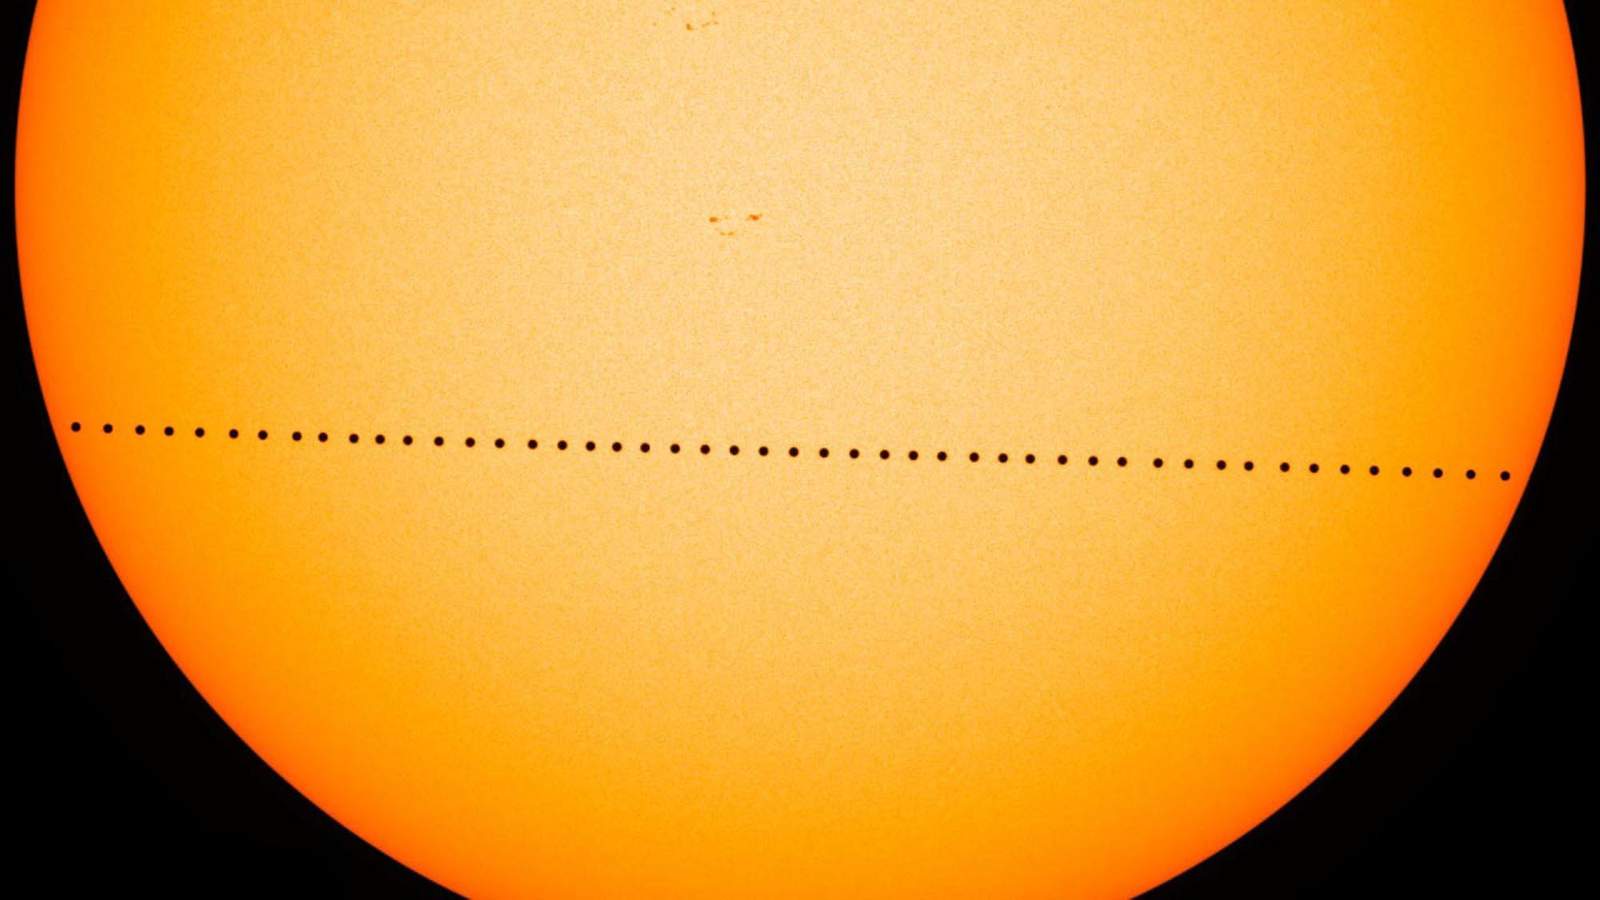 Mercury putting on rare show Monday, parading across the sun